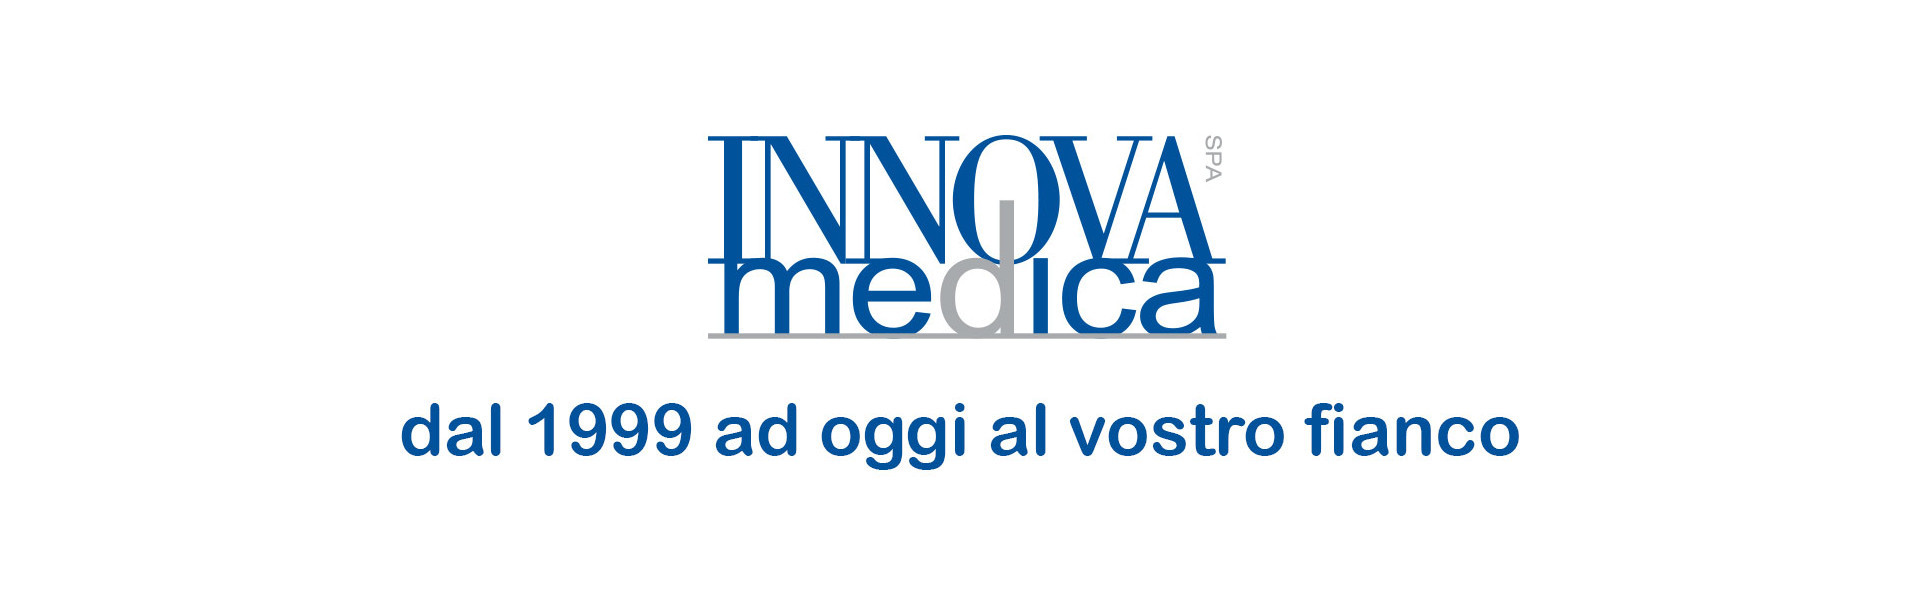 20 years of INNOVA MEDICA